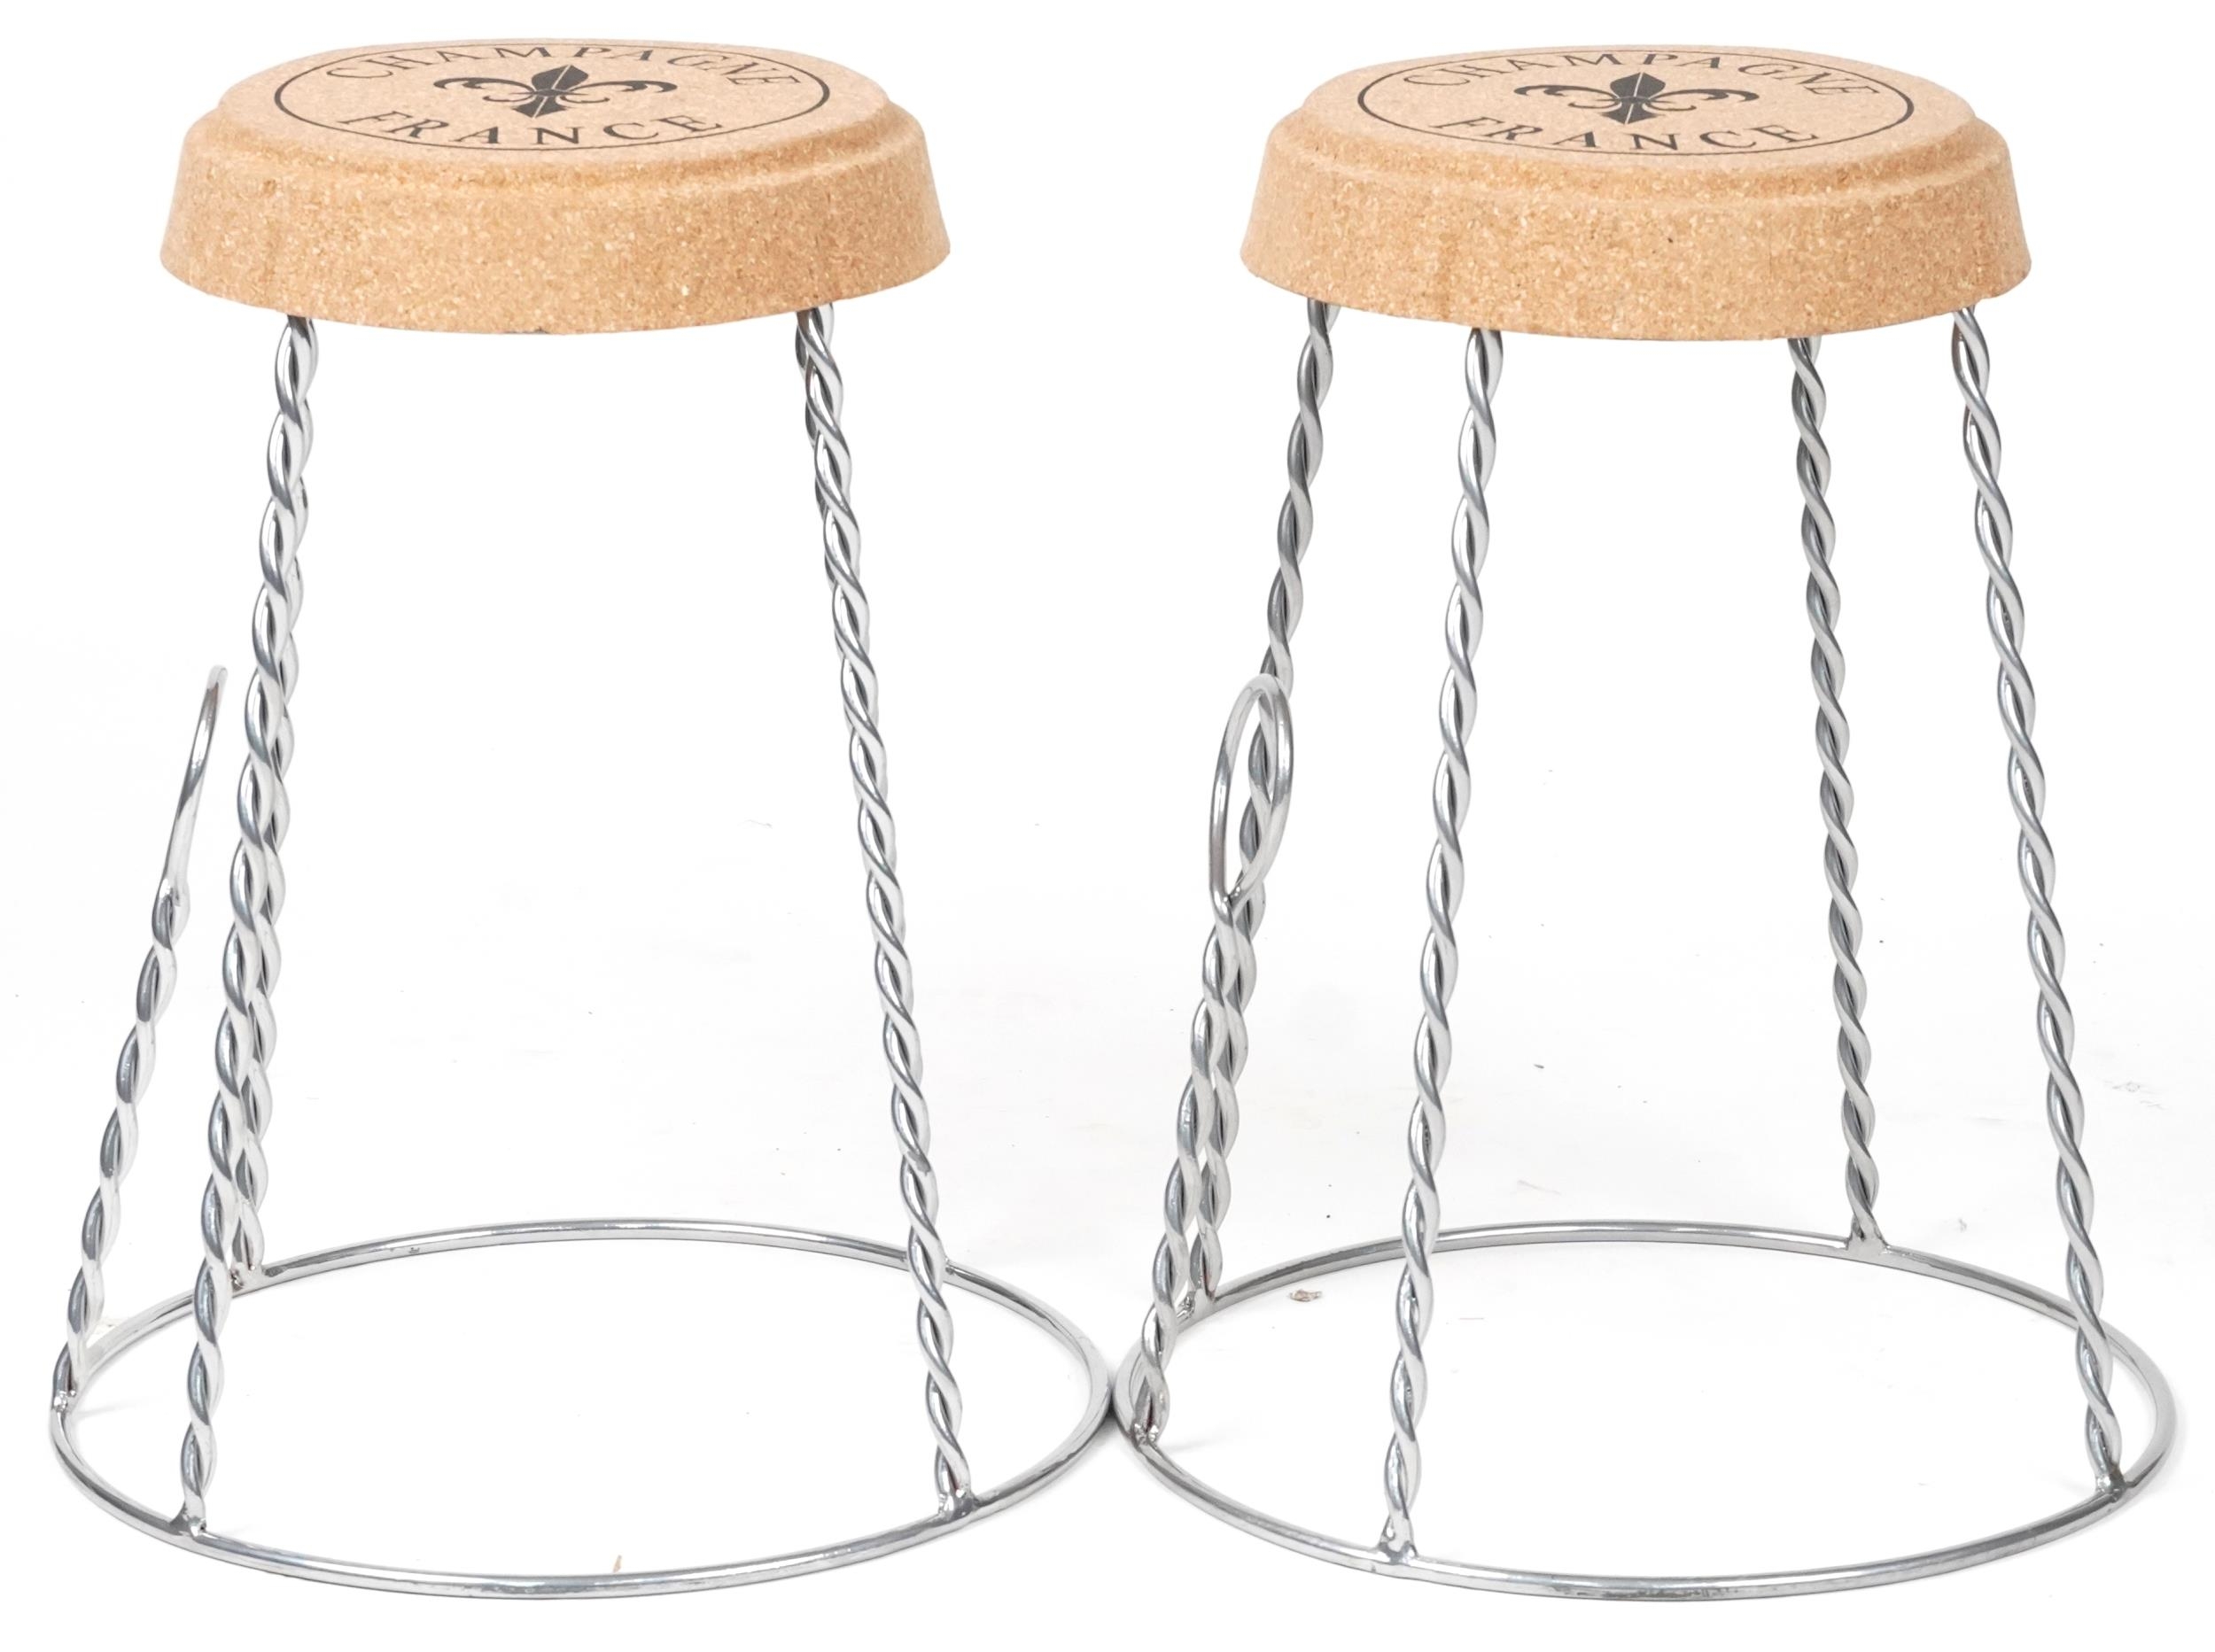 Pair of Champagne cork design stools, each 52cm high